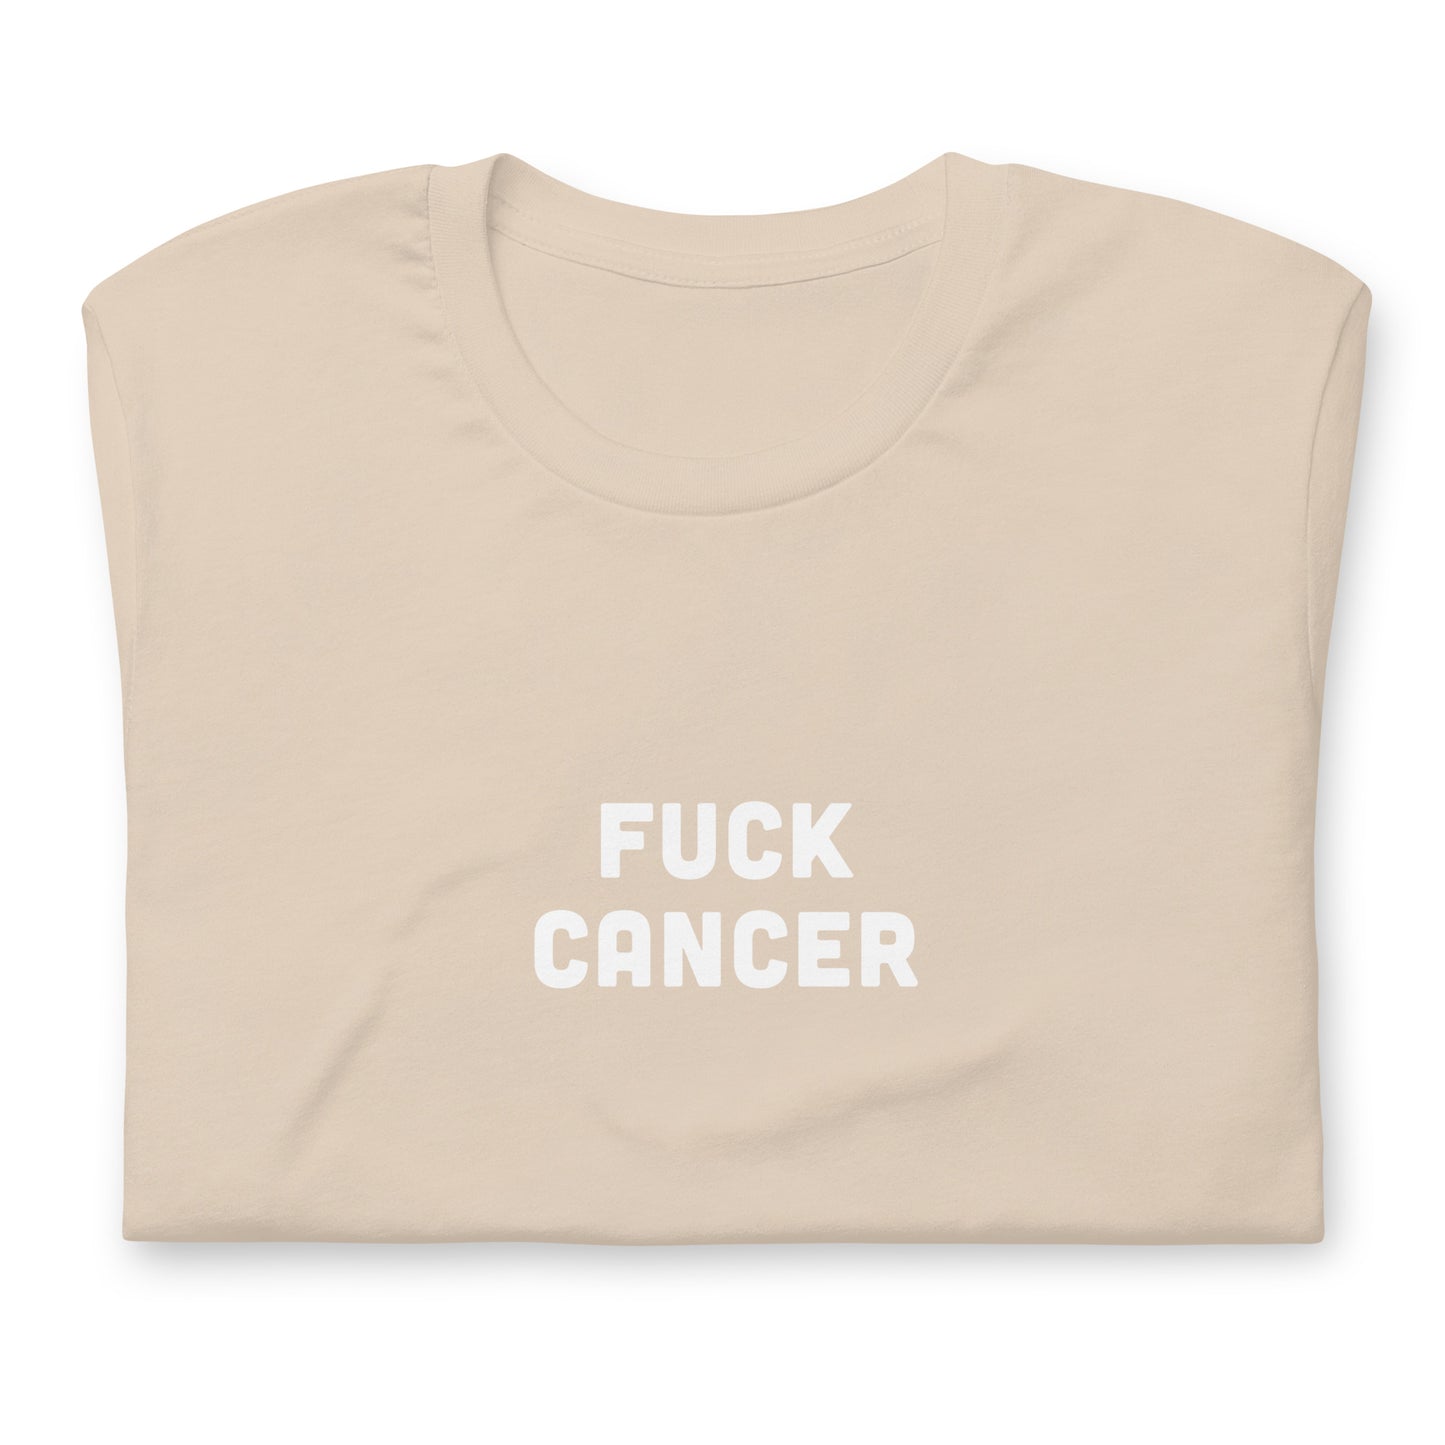 Fuck Cancer T-Shirt Size L Color Asphalt